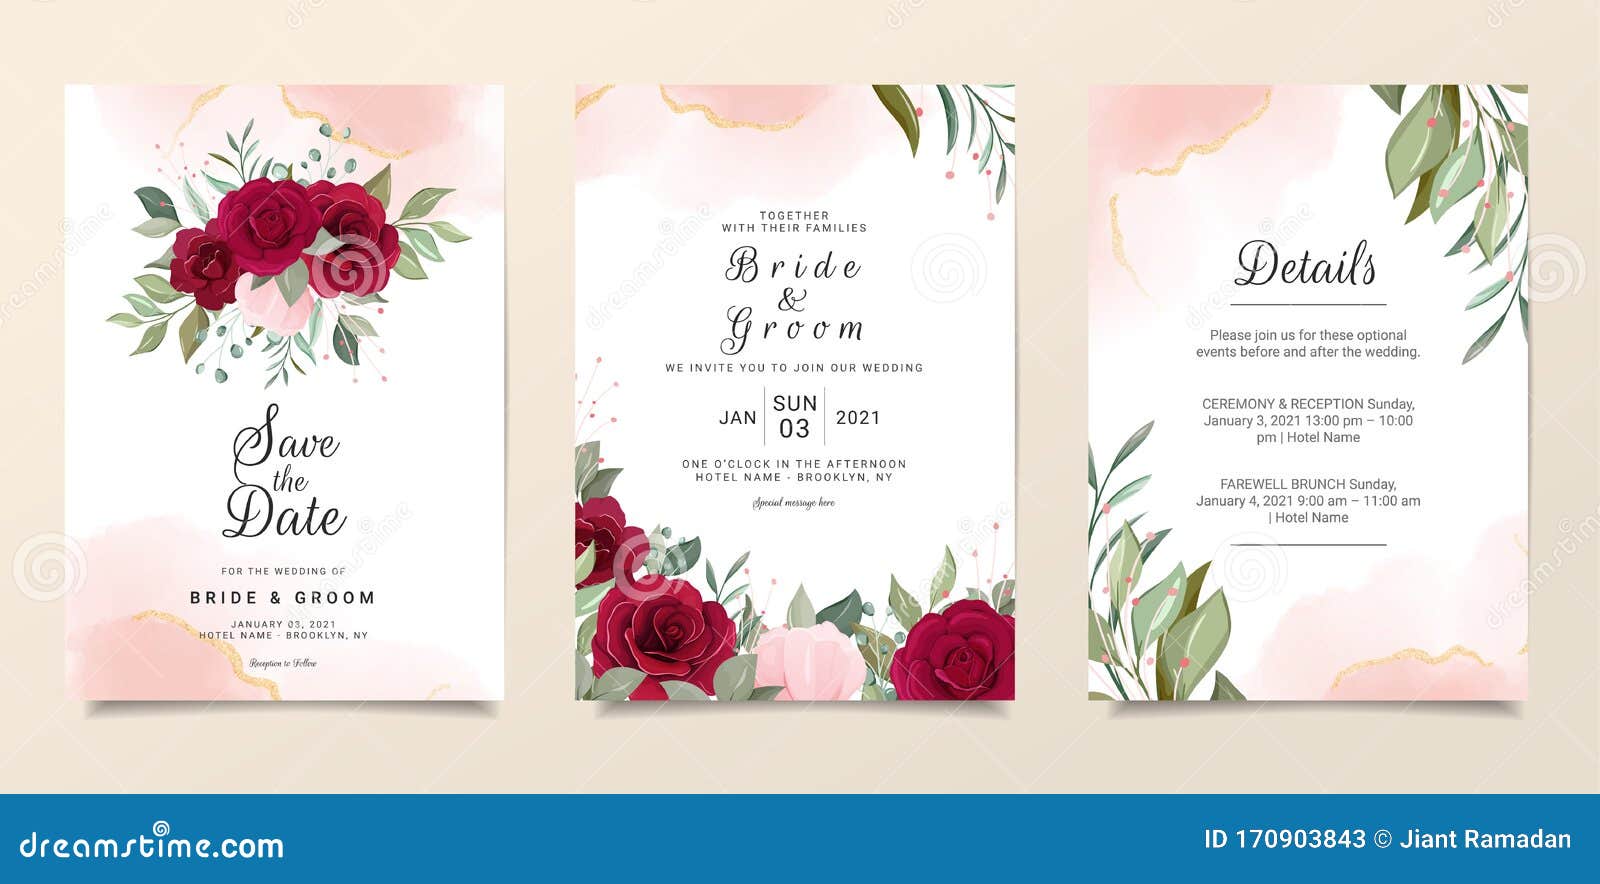 Elegant Wedding Invitation Card Template Set with Floral Frame and Fluid  Background. Roses and Leaves Botanic Illustration for Stock Vector -  Illustration of floral, design: 170903843